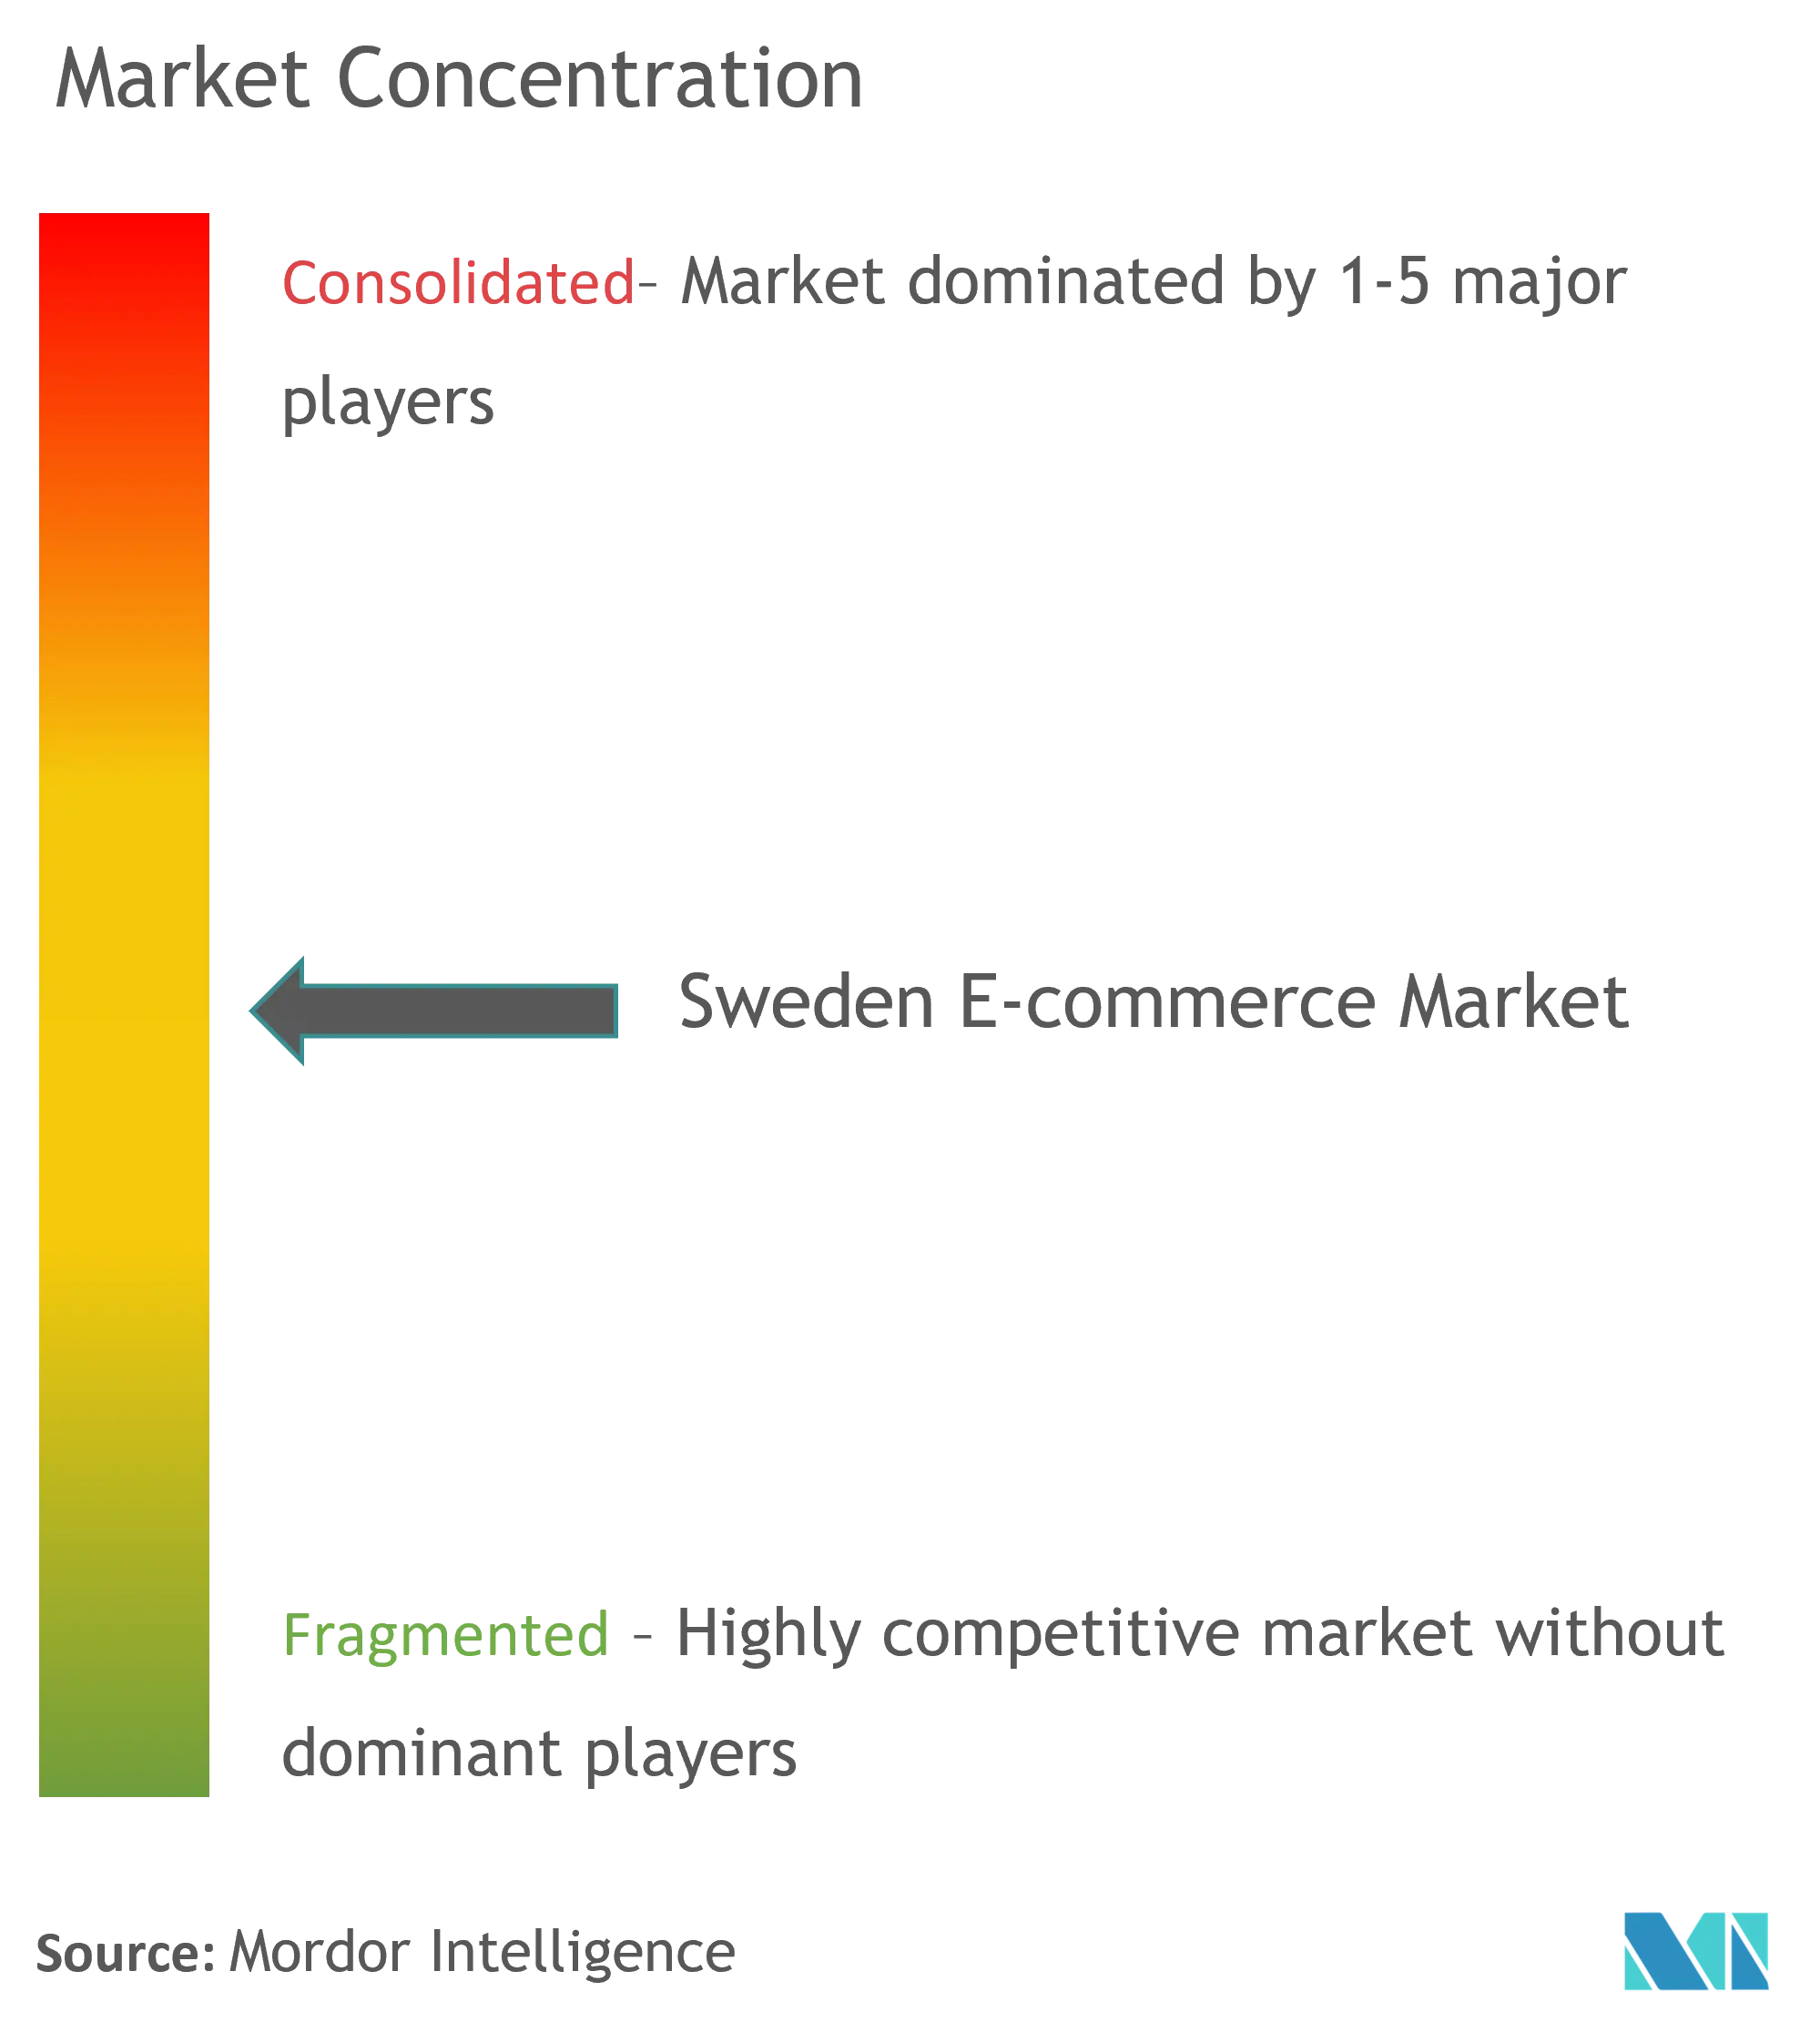 Sweden E-commerce Market Concentration